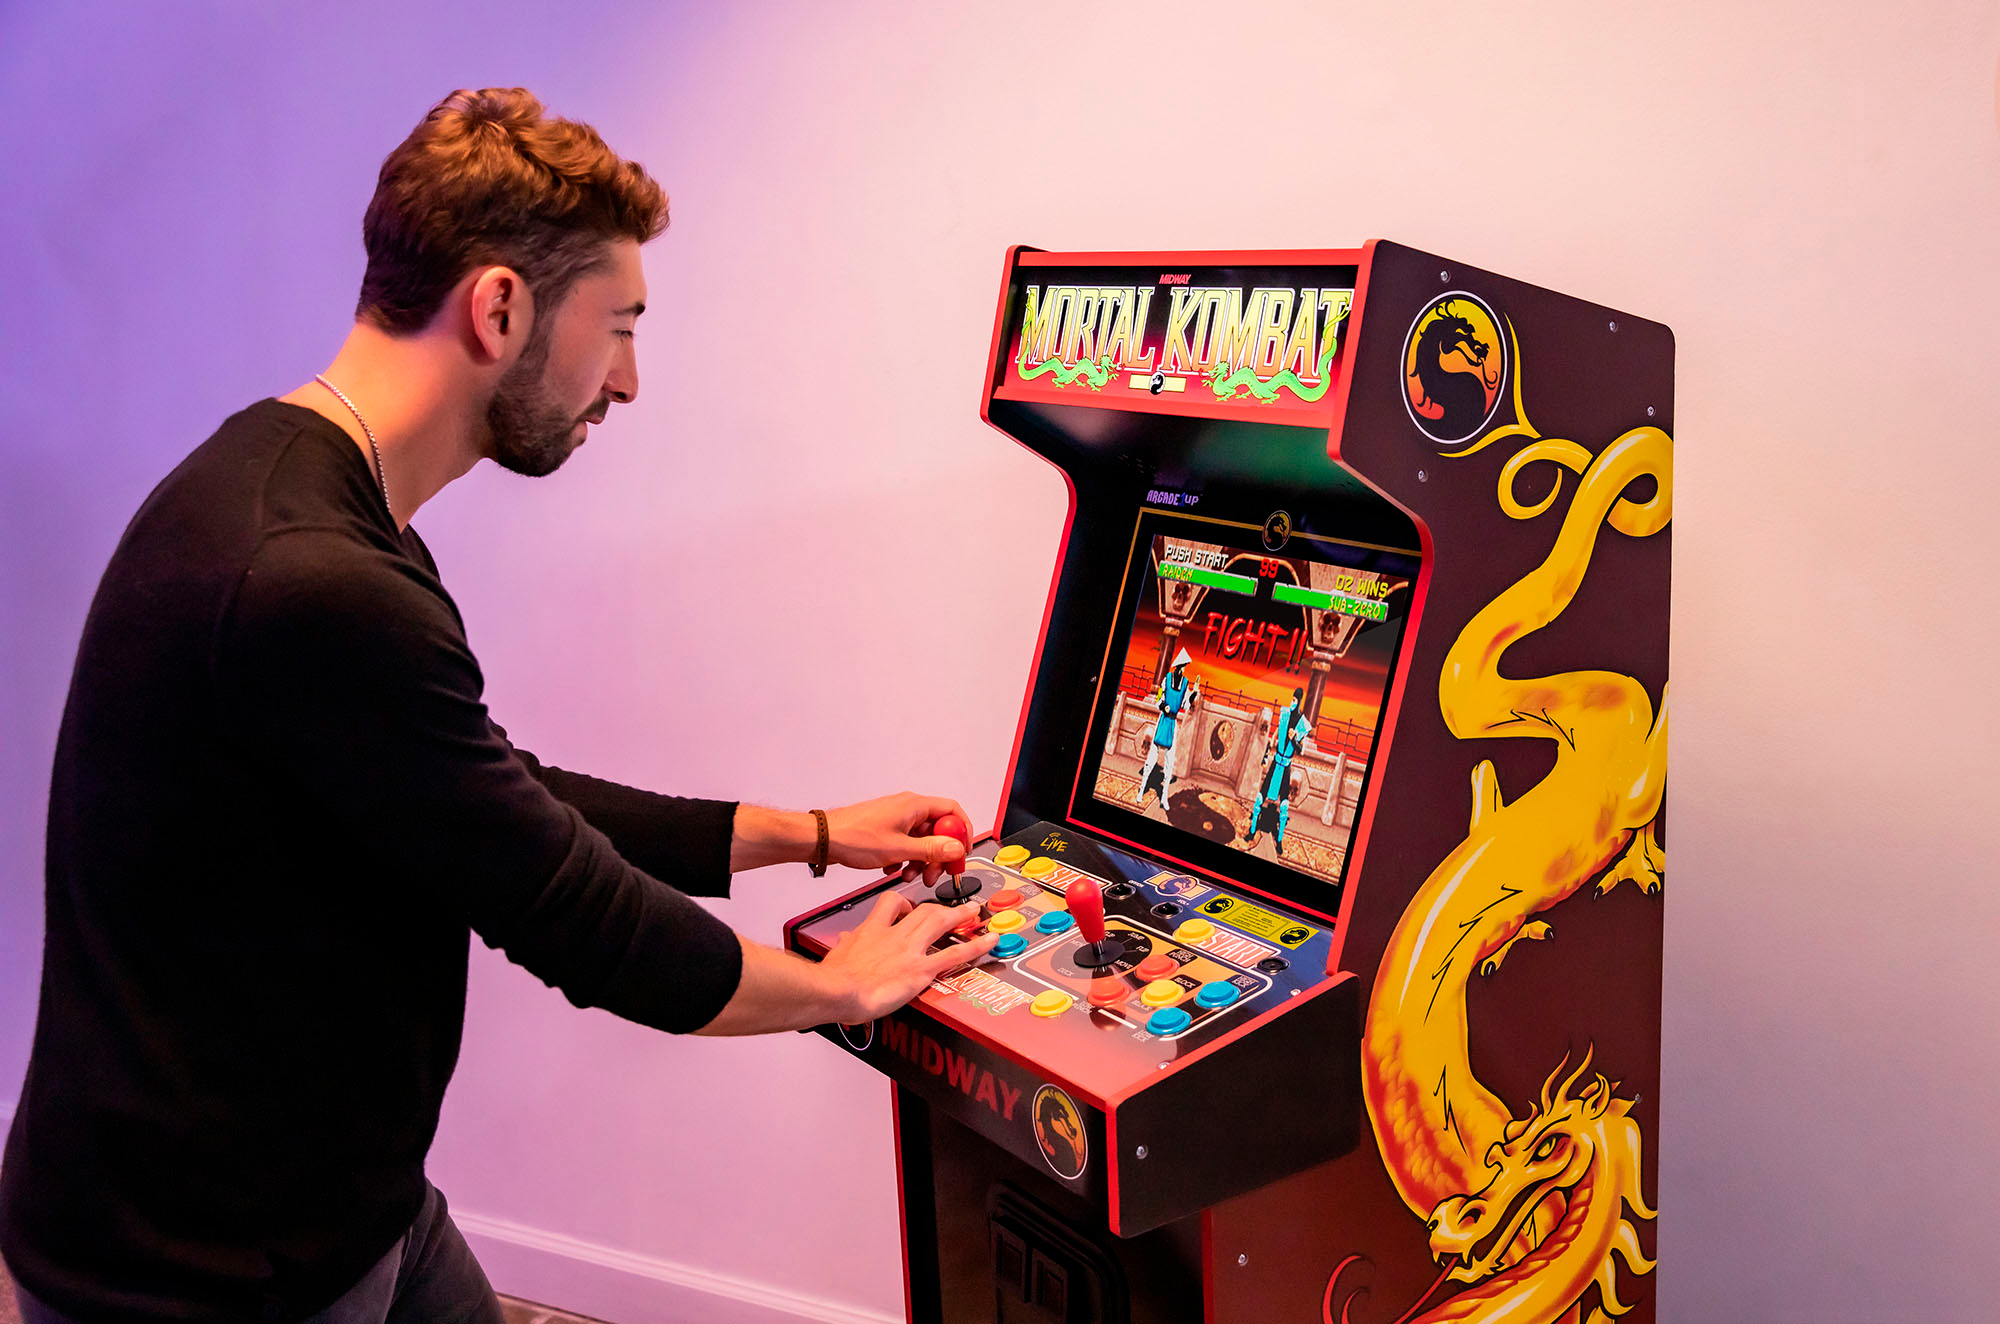 Arcade1Up Midway Legacy Mortal Kombat™ 30th Anniversary Arcade Game 